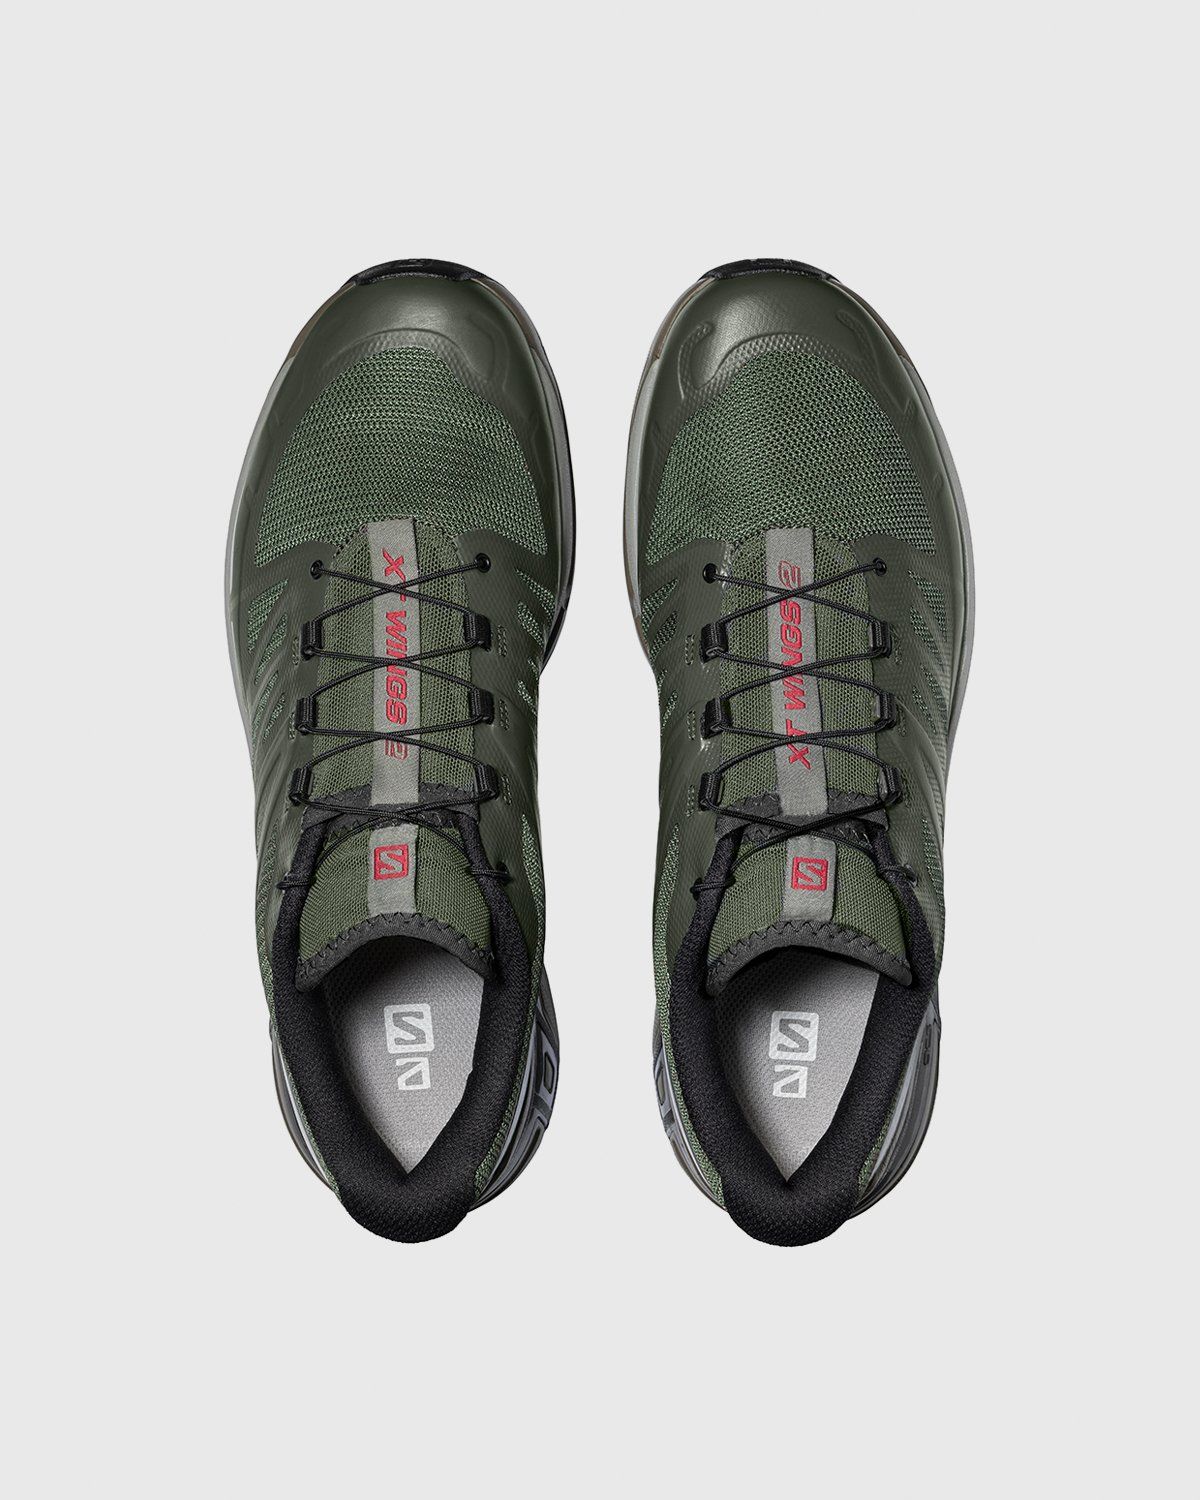 Salomon – XT-Wings 2 Advanced Peat - Sneakers - Black - Image 4